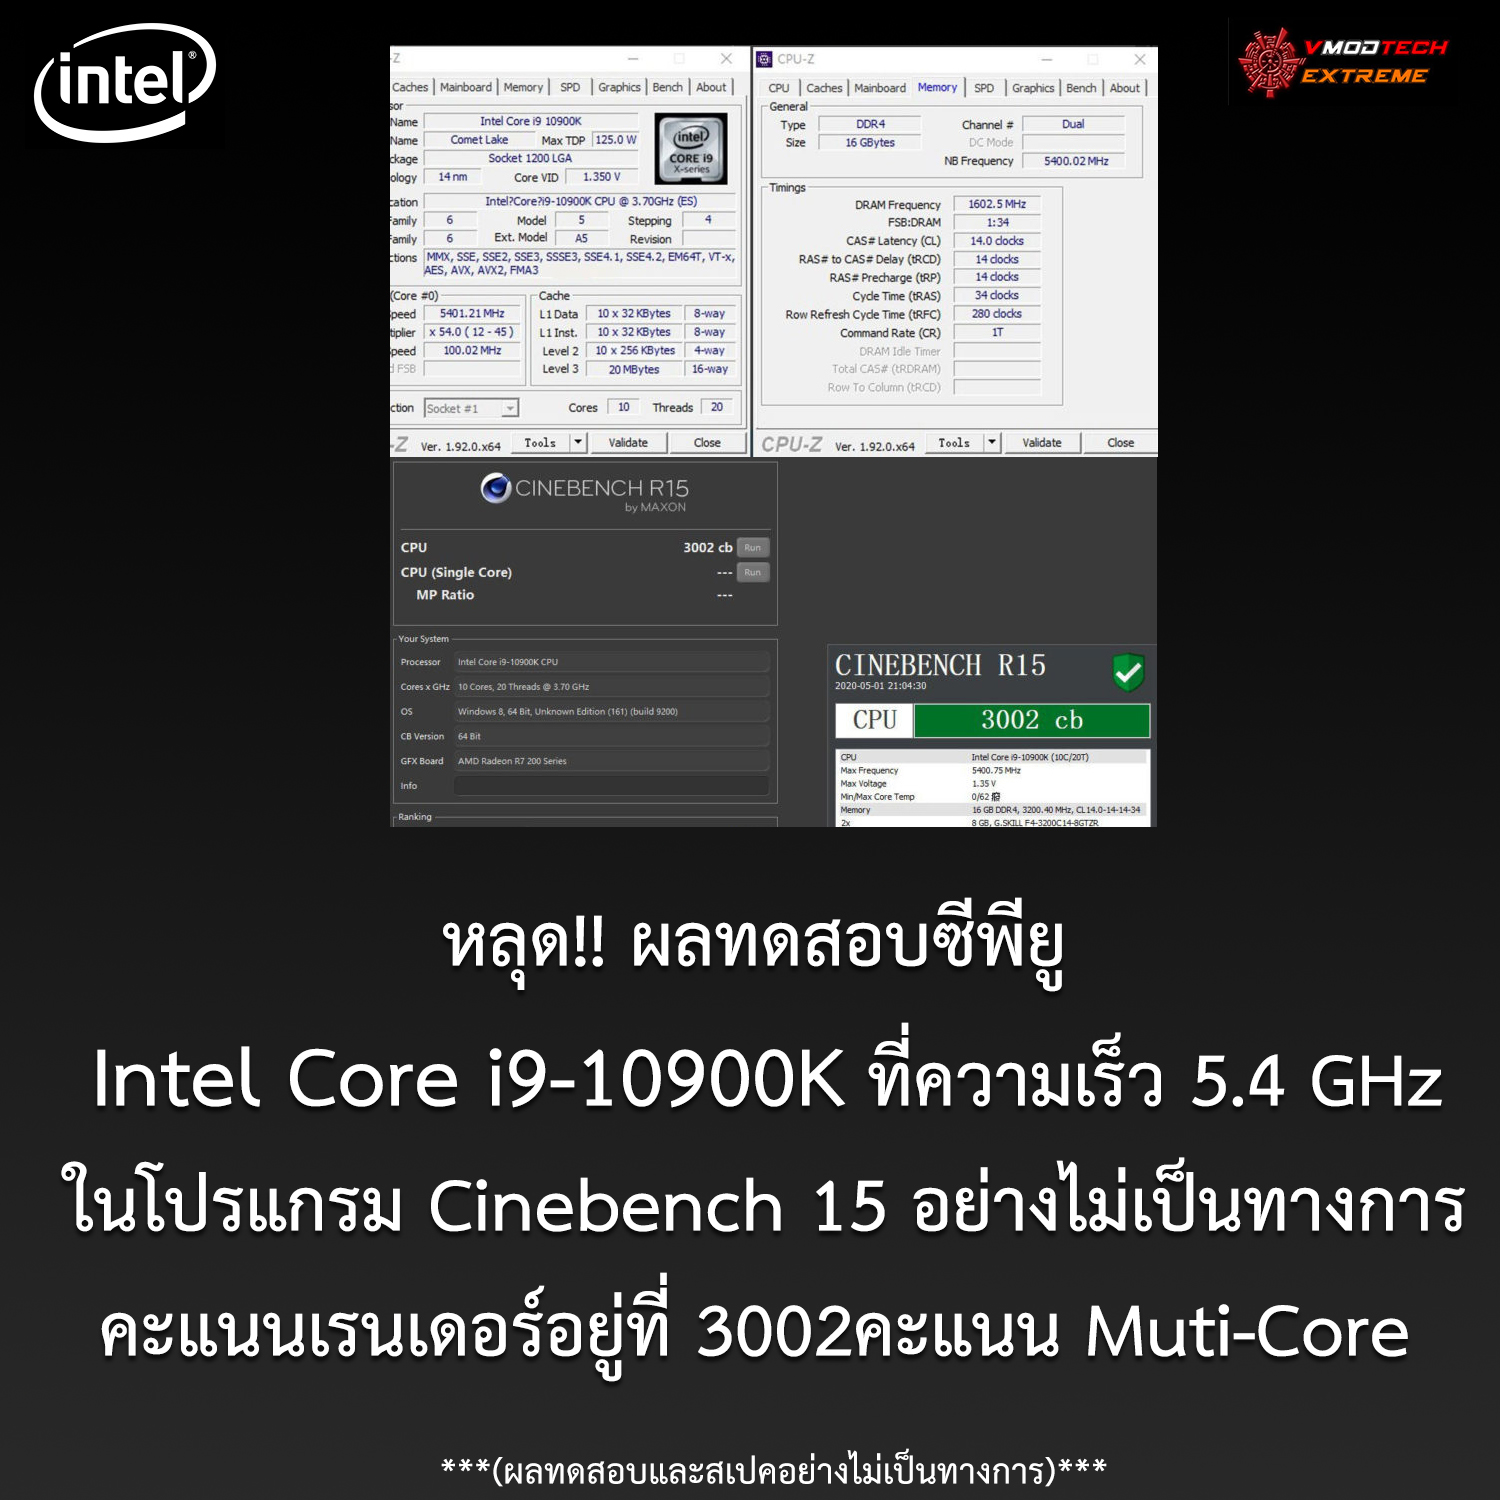 intel core i9 10900k cine15 benchmark หลุด!! ผลทดสอบ Intel Core i9 10900K ที่ความเร็ว 5.4 GHz ในโปรแกรม Cinebench 15 อย่างไม่เป็นทางการ 